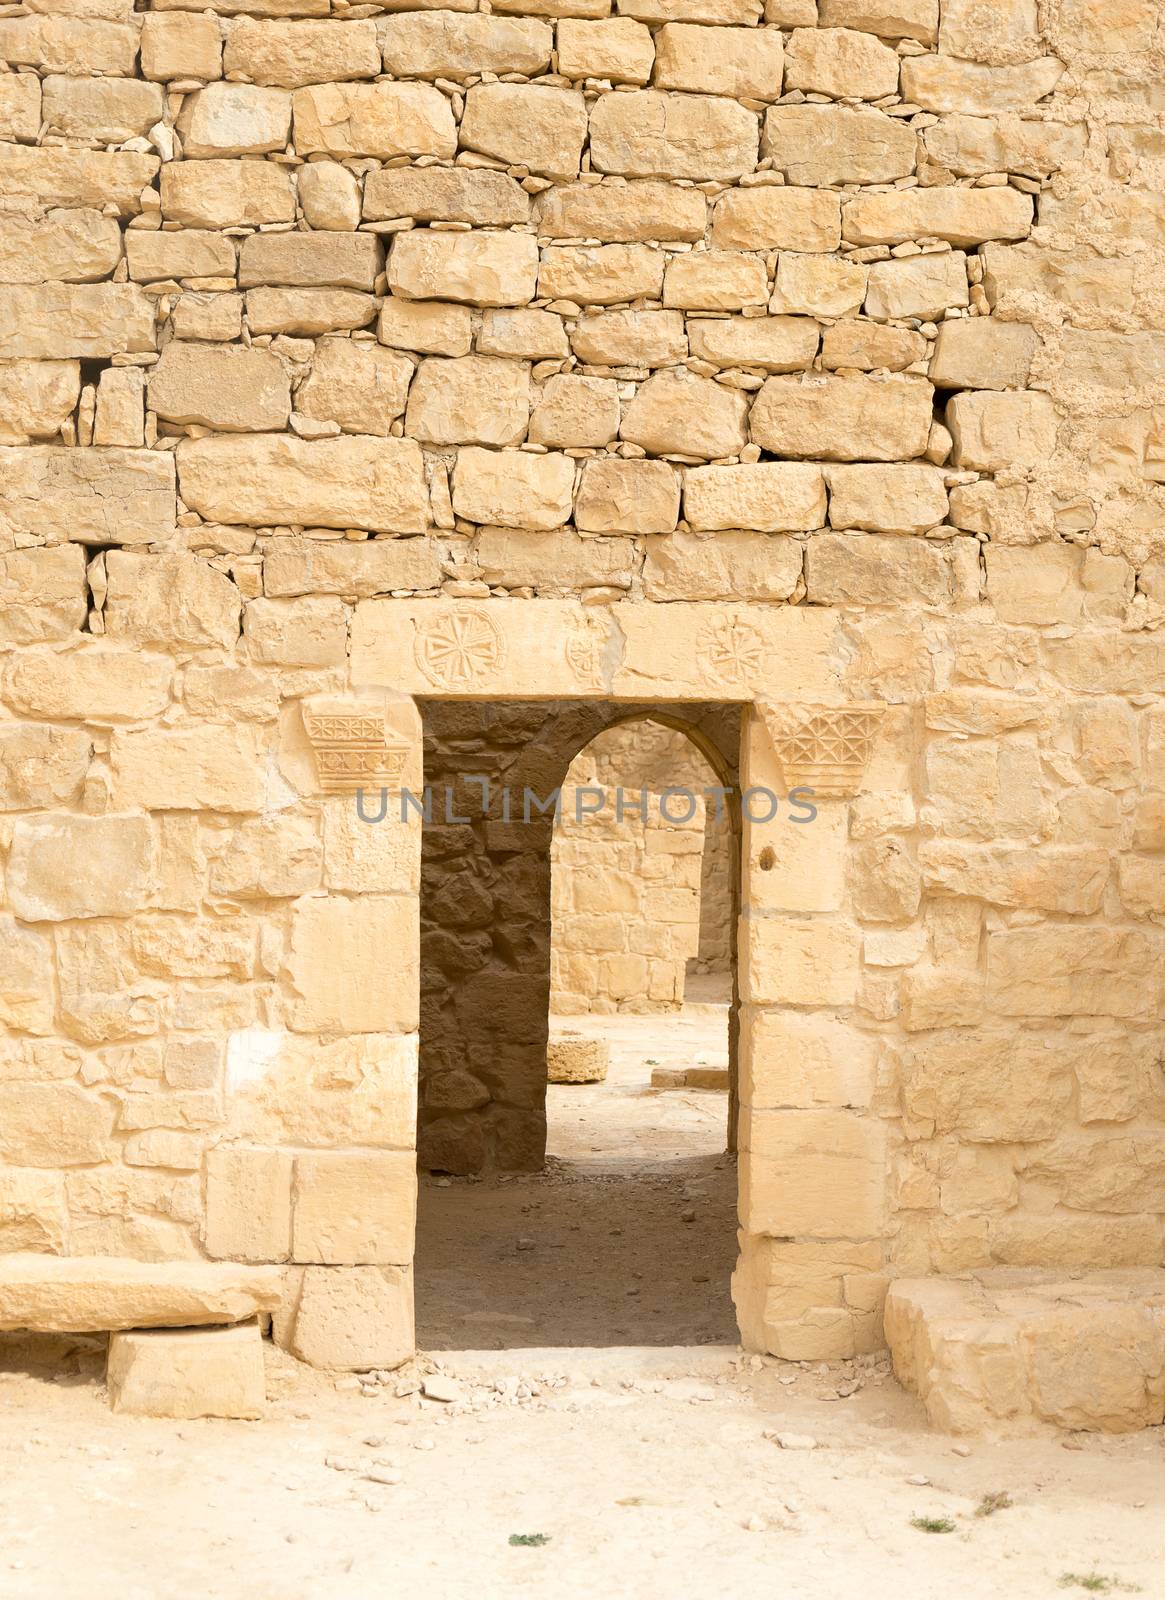 World heritage historic site of Shivta in Negev desert